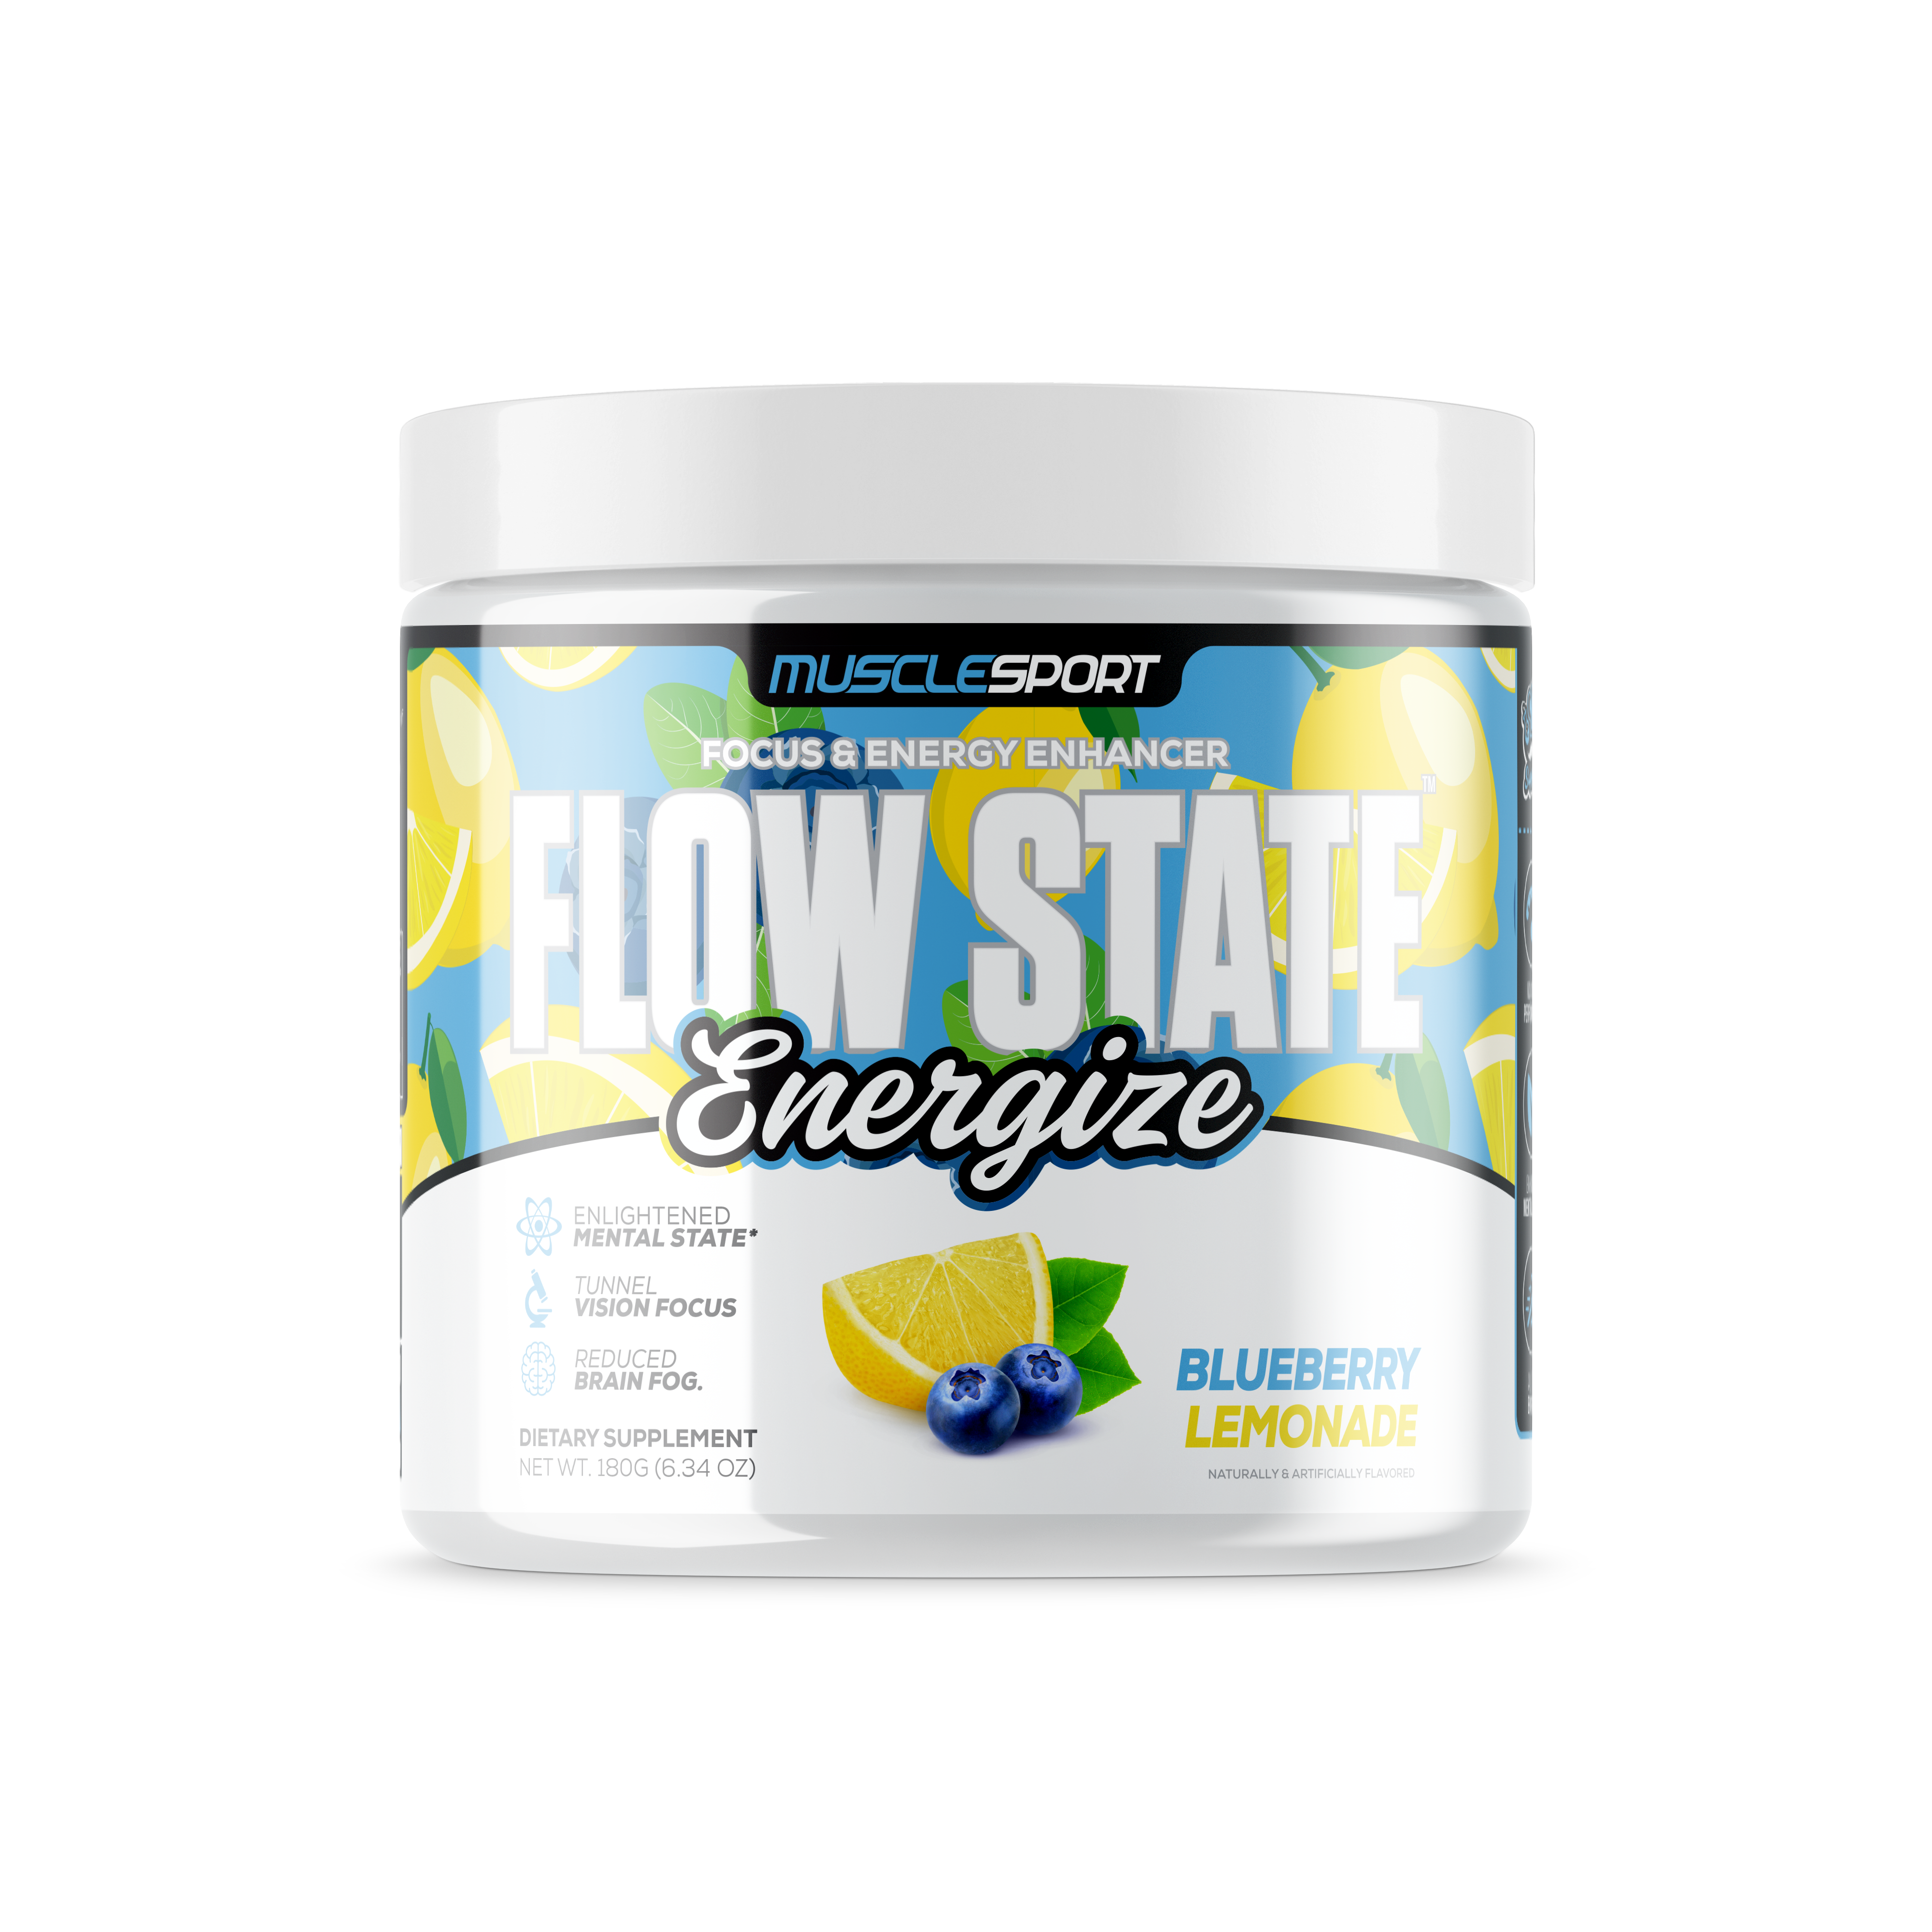 MuscleSport® Blueberry Lemonade Flow State Energize